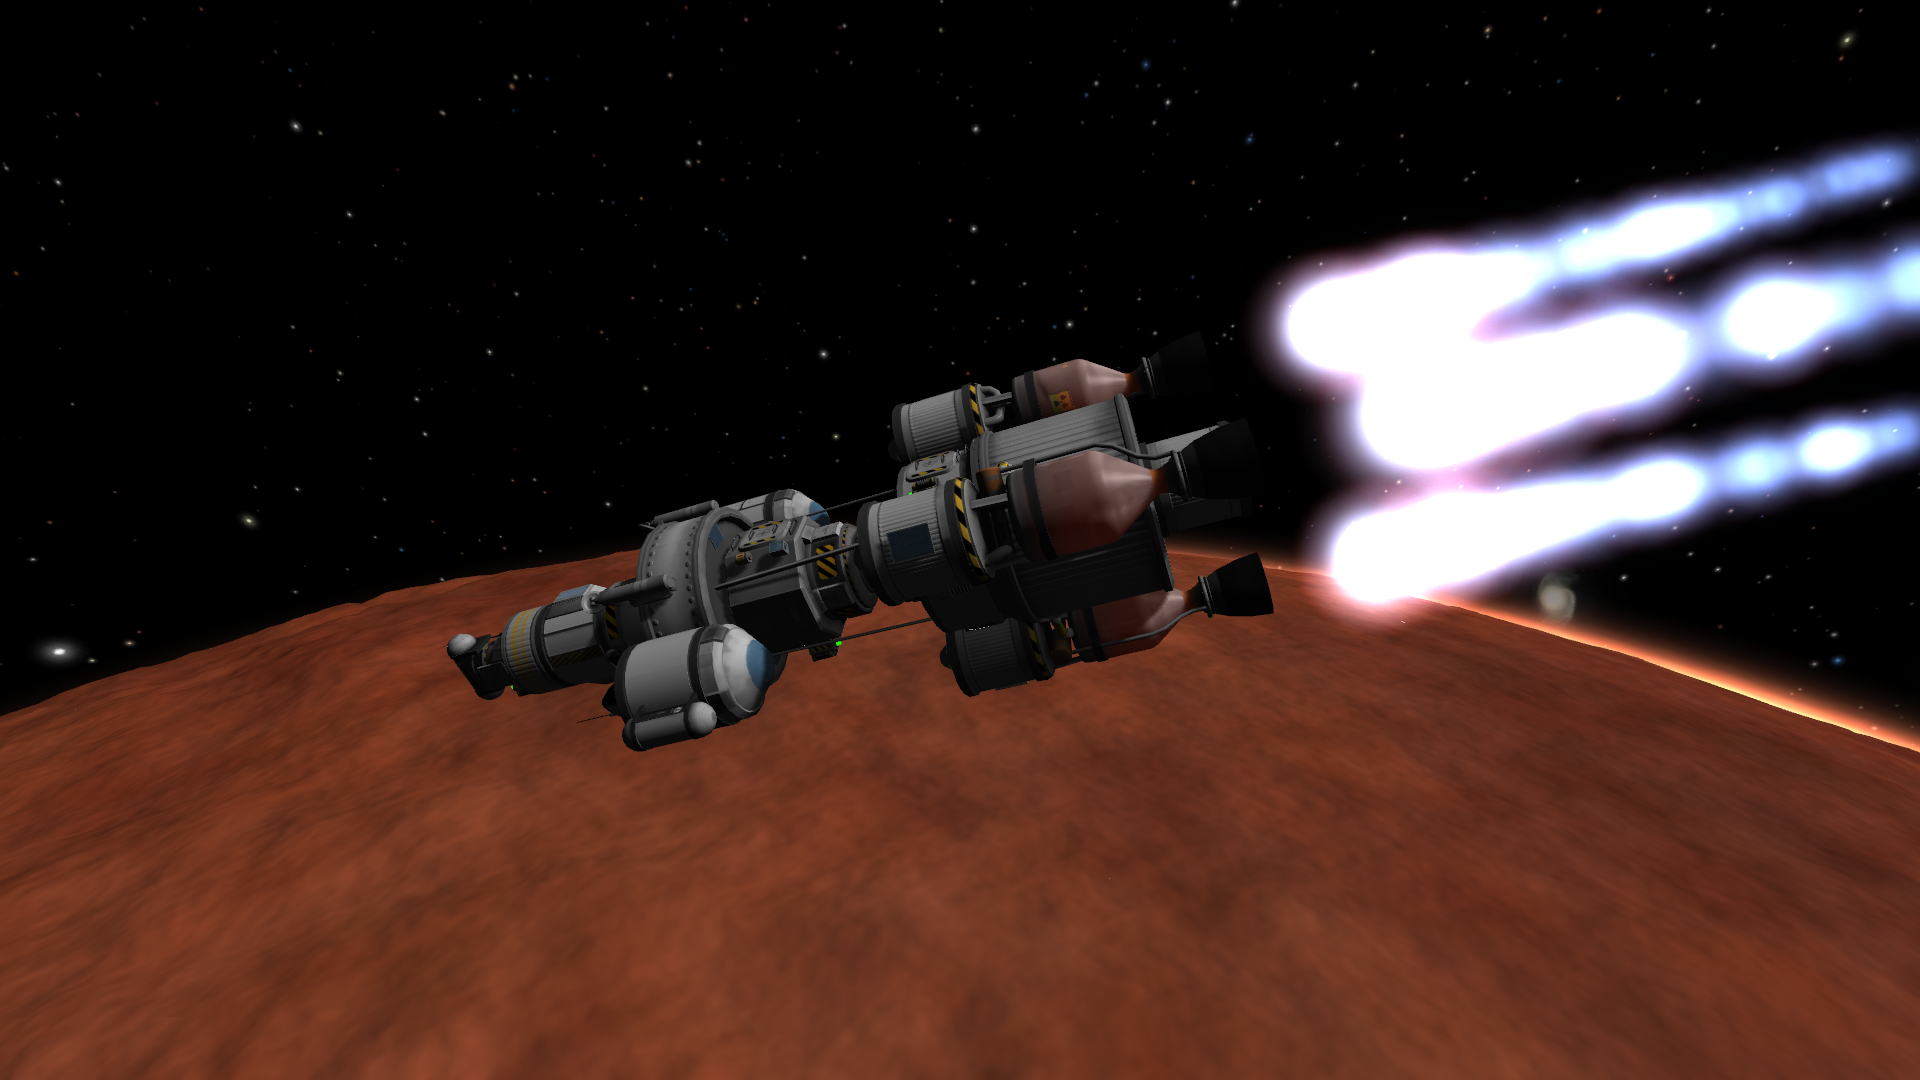 ambition burning to achieve orbit around duna